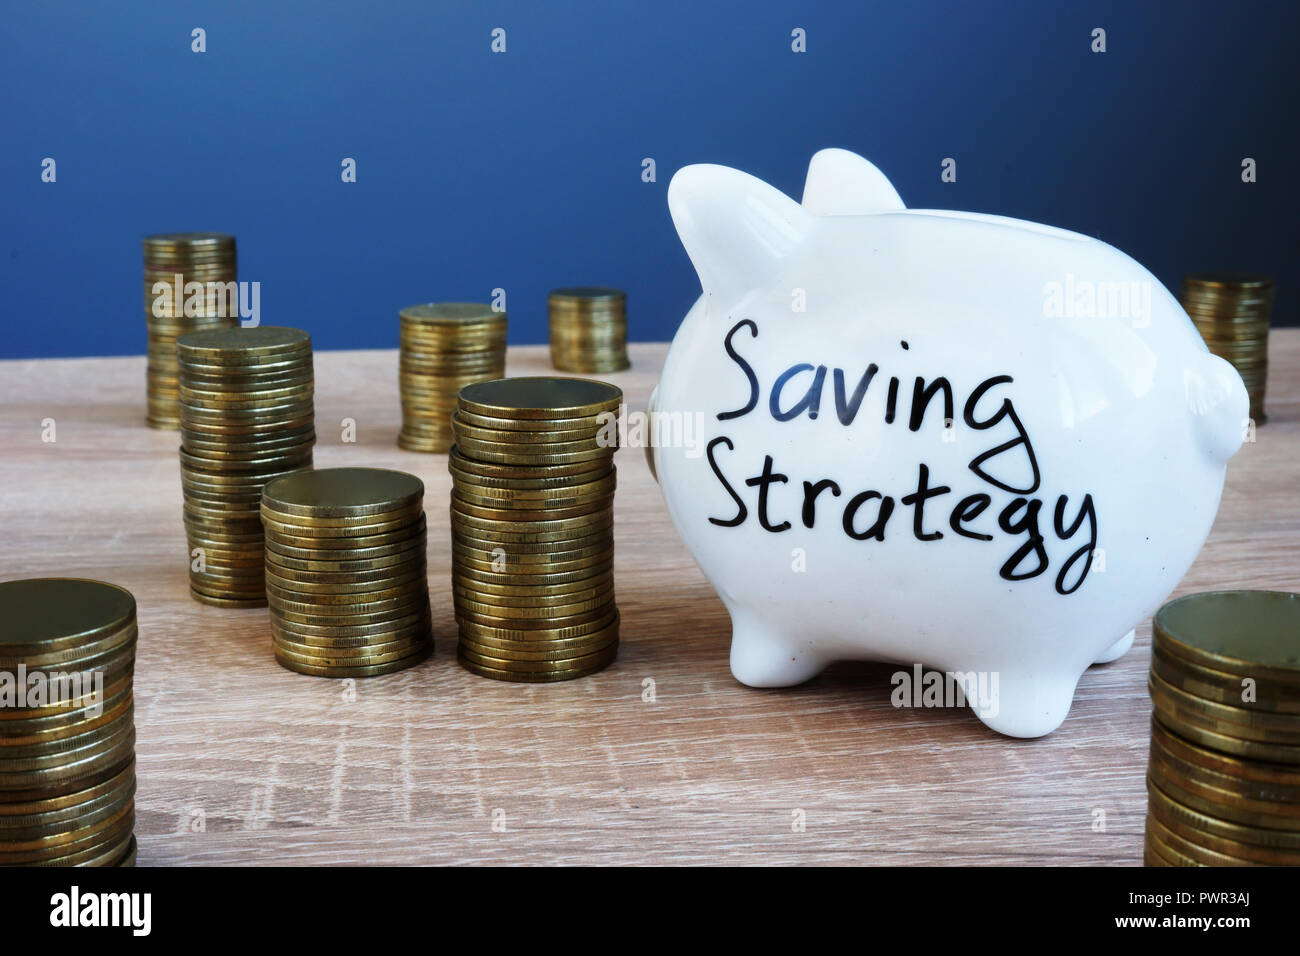 Saving strategies written on a piggy bank and money. Stock Photo